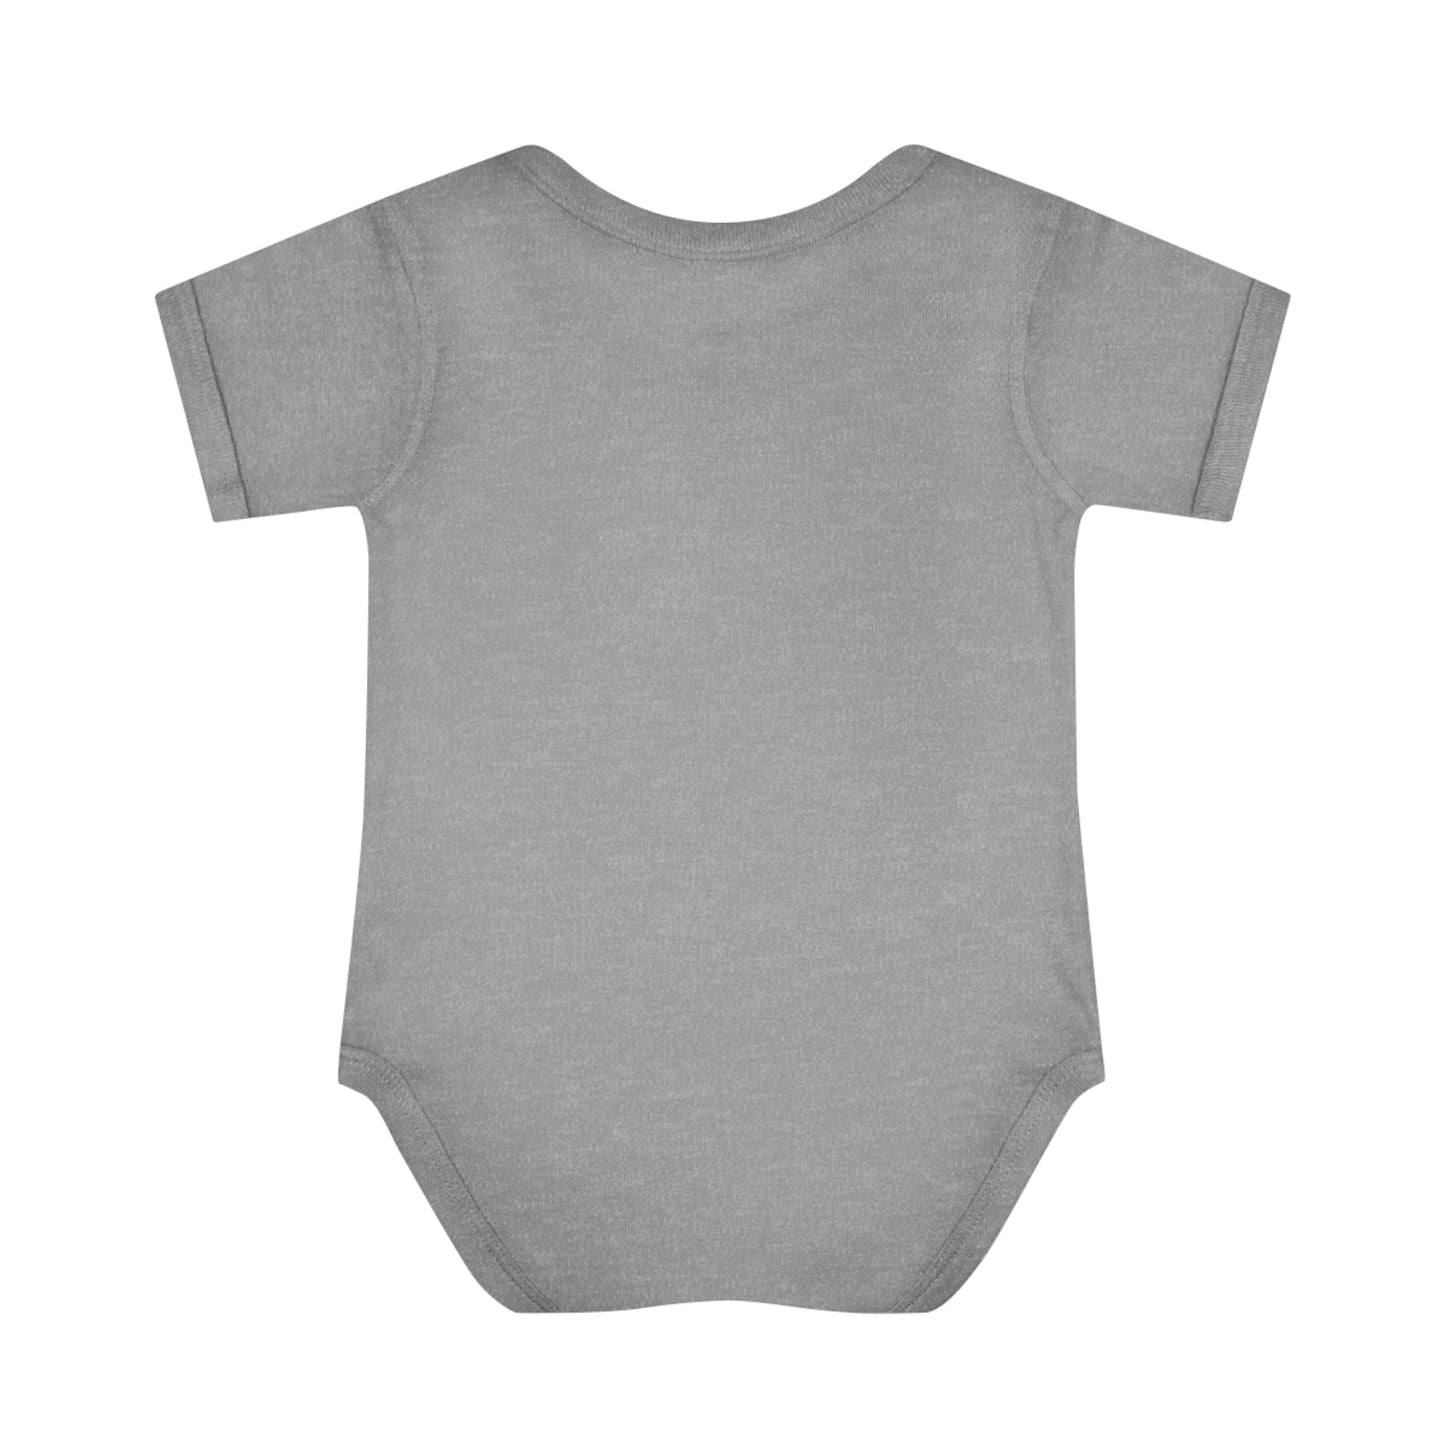 Mister Lucky Charm Infant Onesie Baby Rib Bodysuit